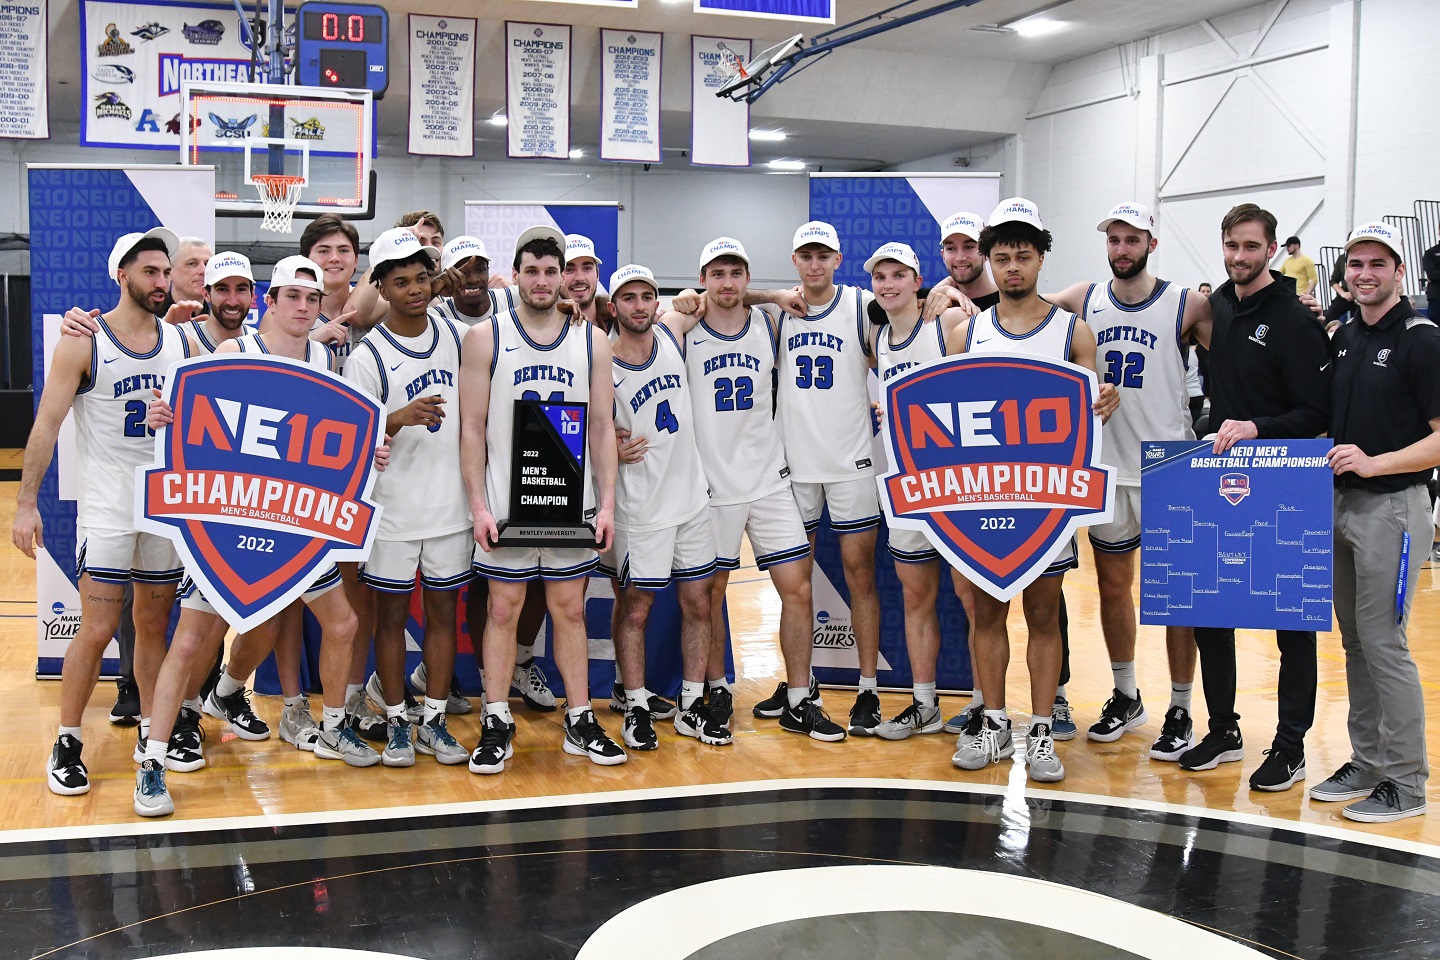 Bentley University men's basketball team celebrates the 2022 conference championship